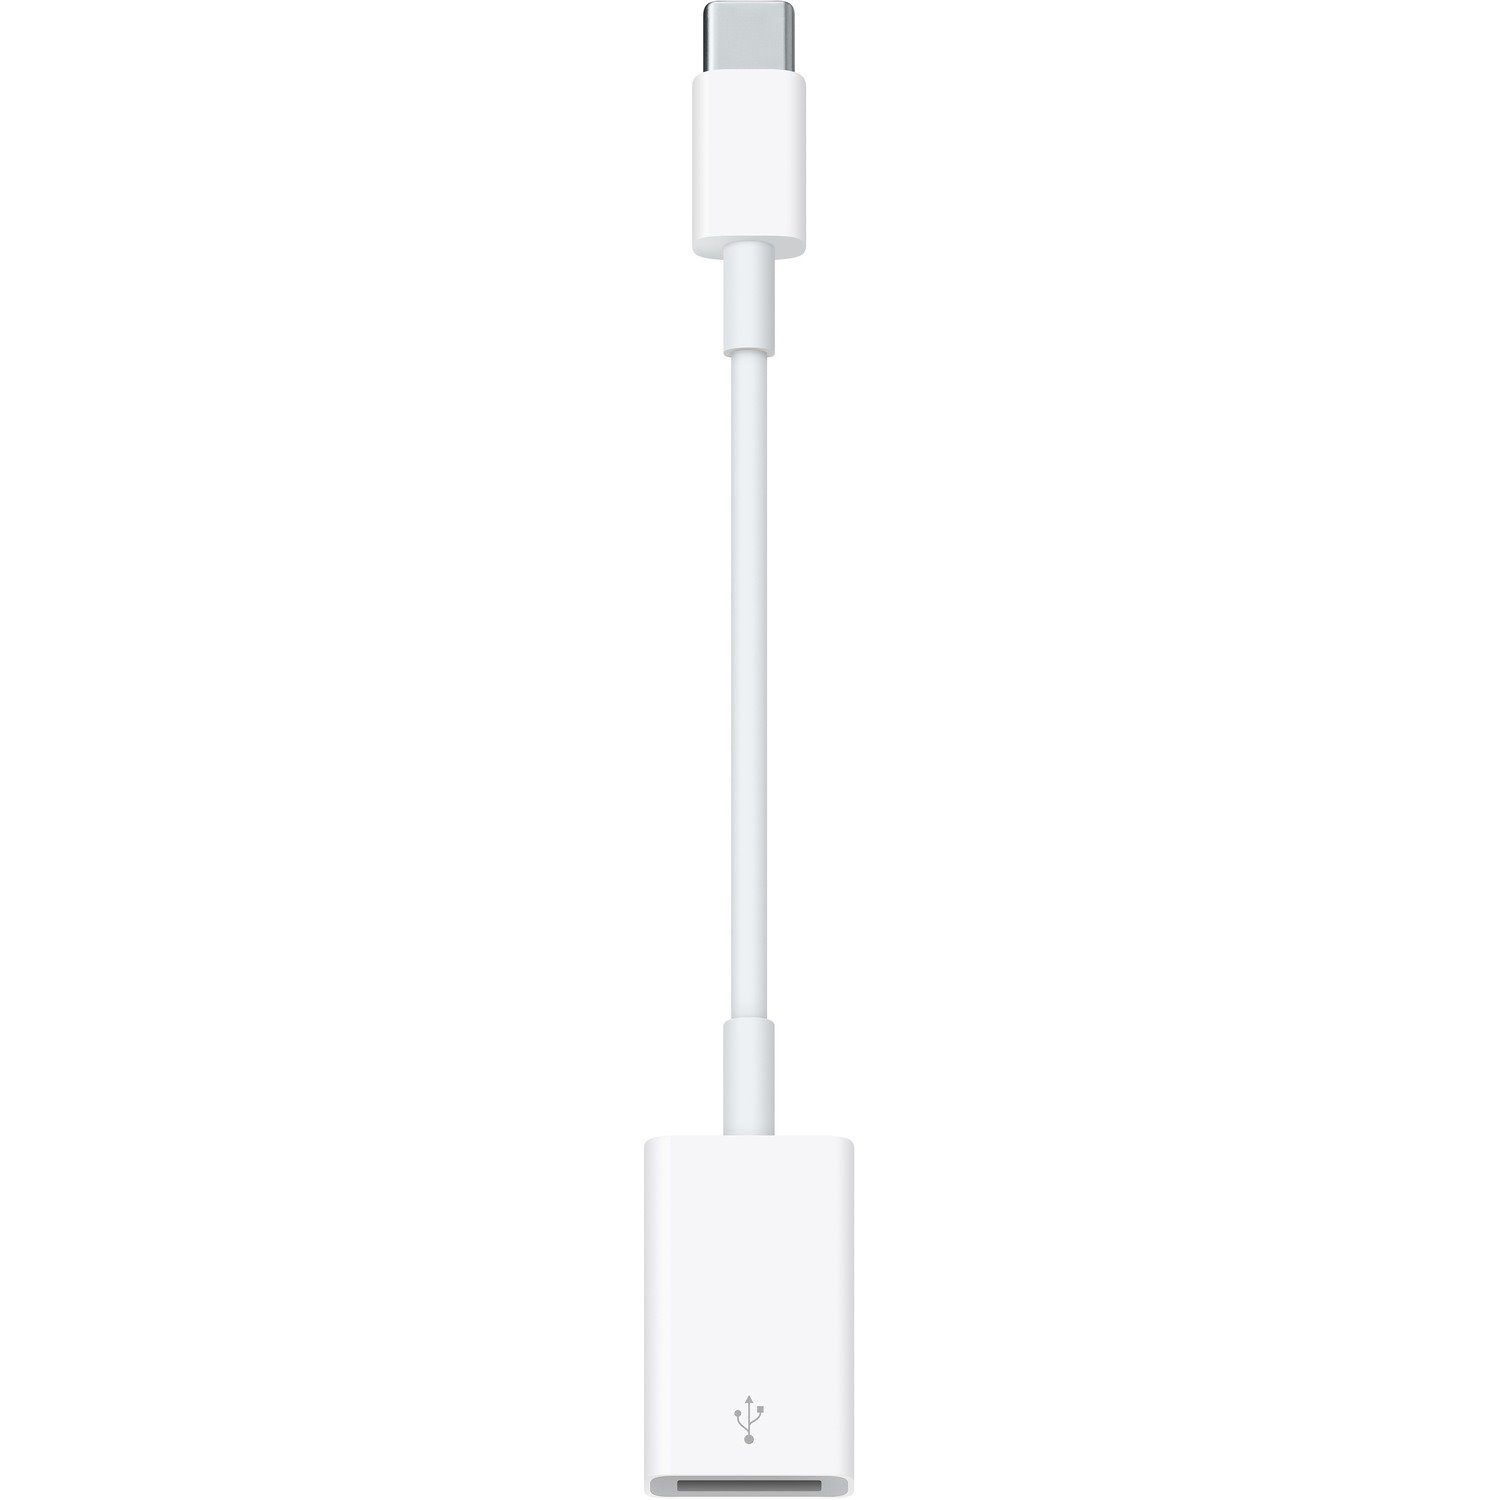 Apple USB Data Transfer Cable for iPad, iPod, iPhone, MacBook, Flash Drive, Camera